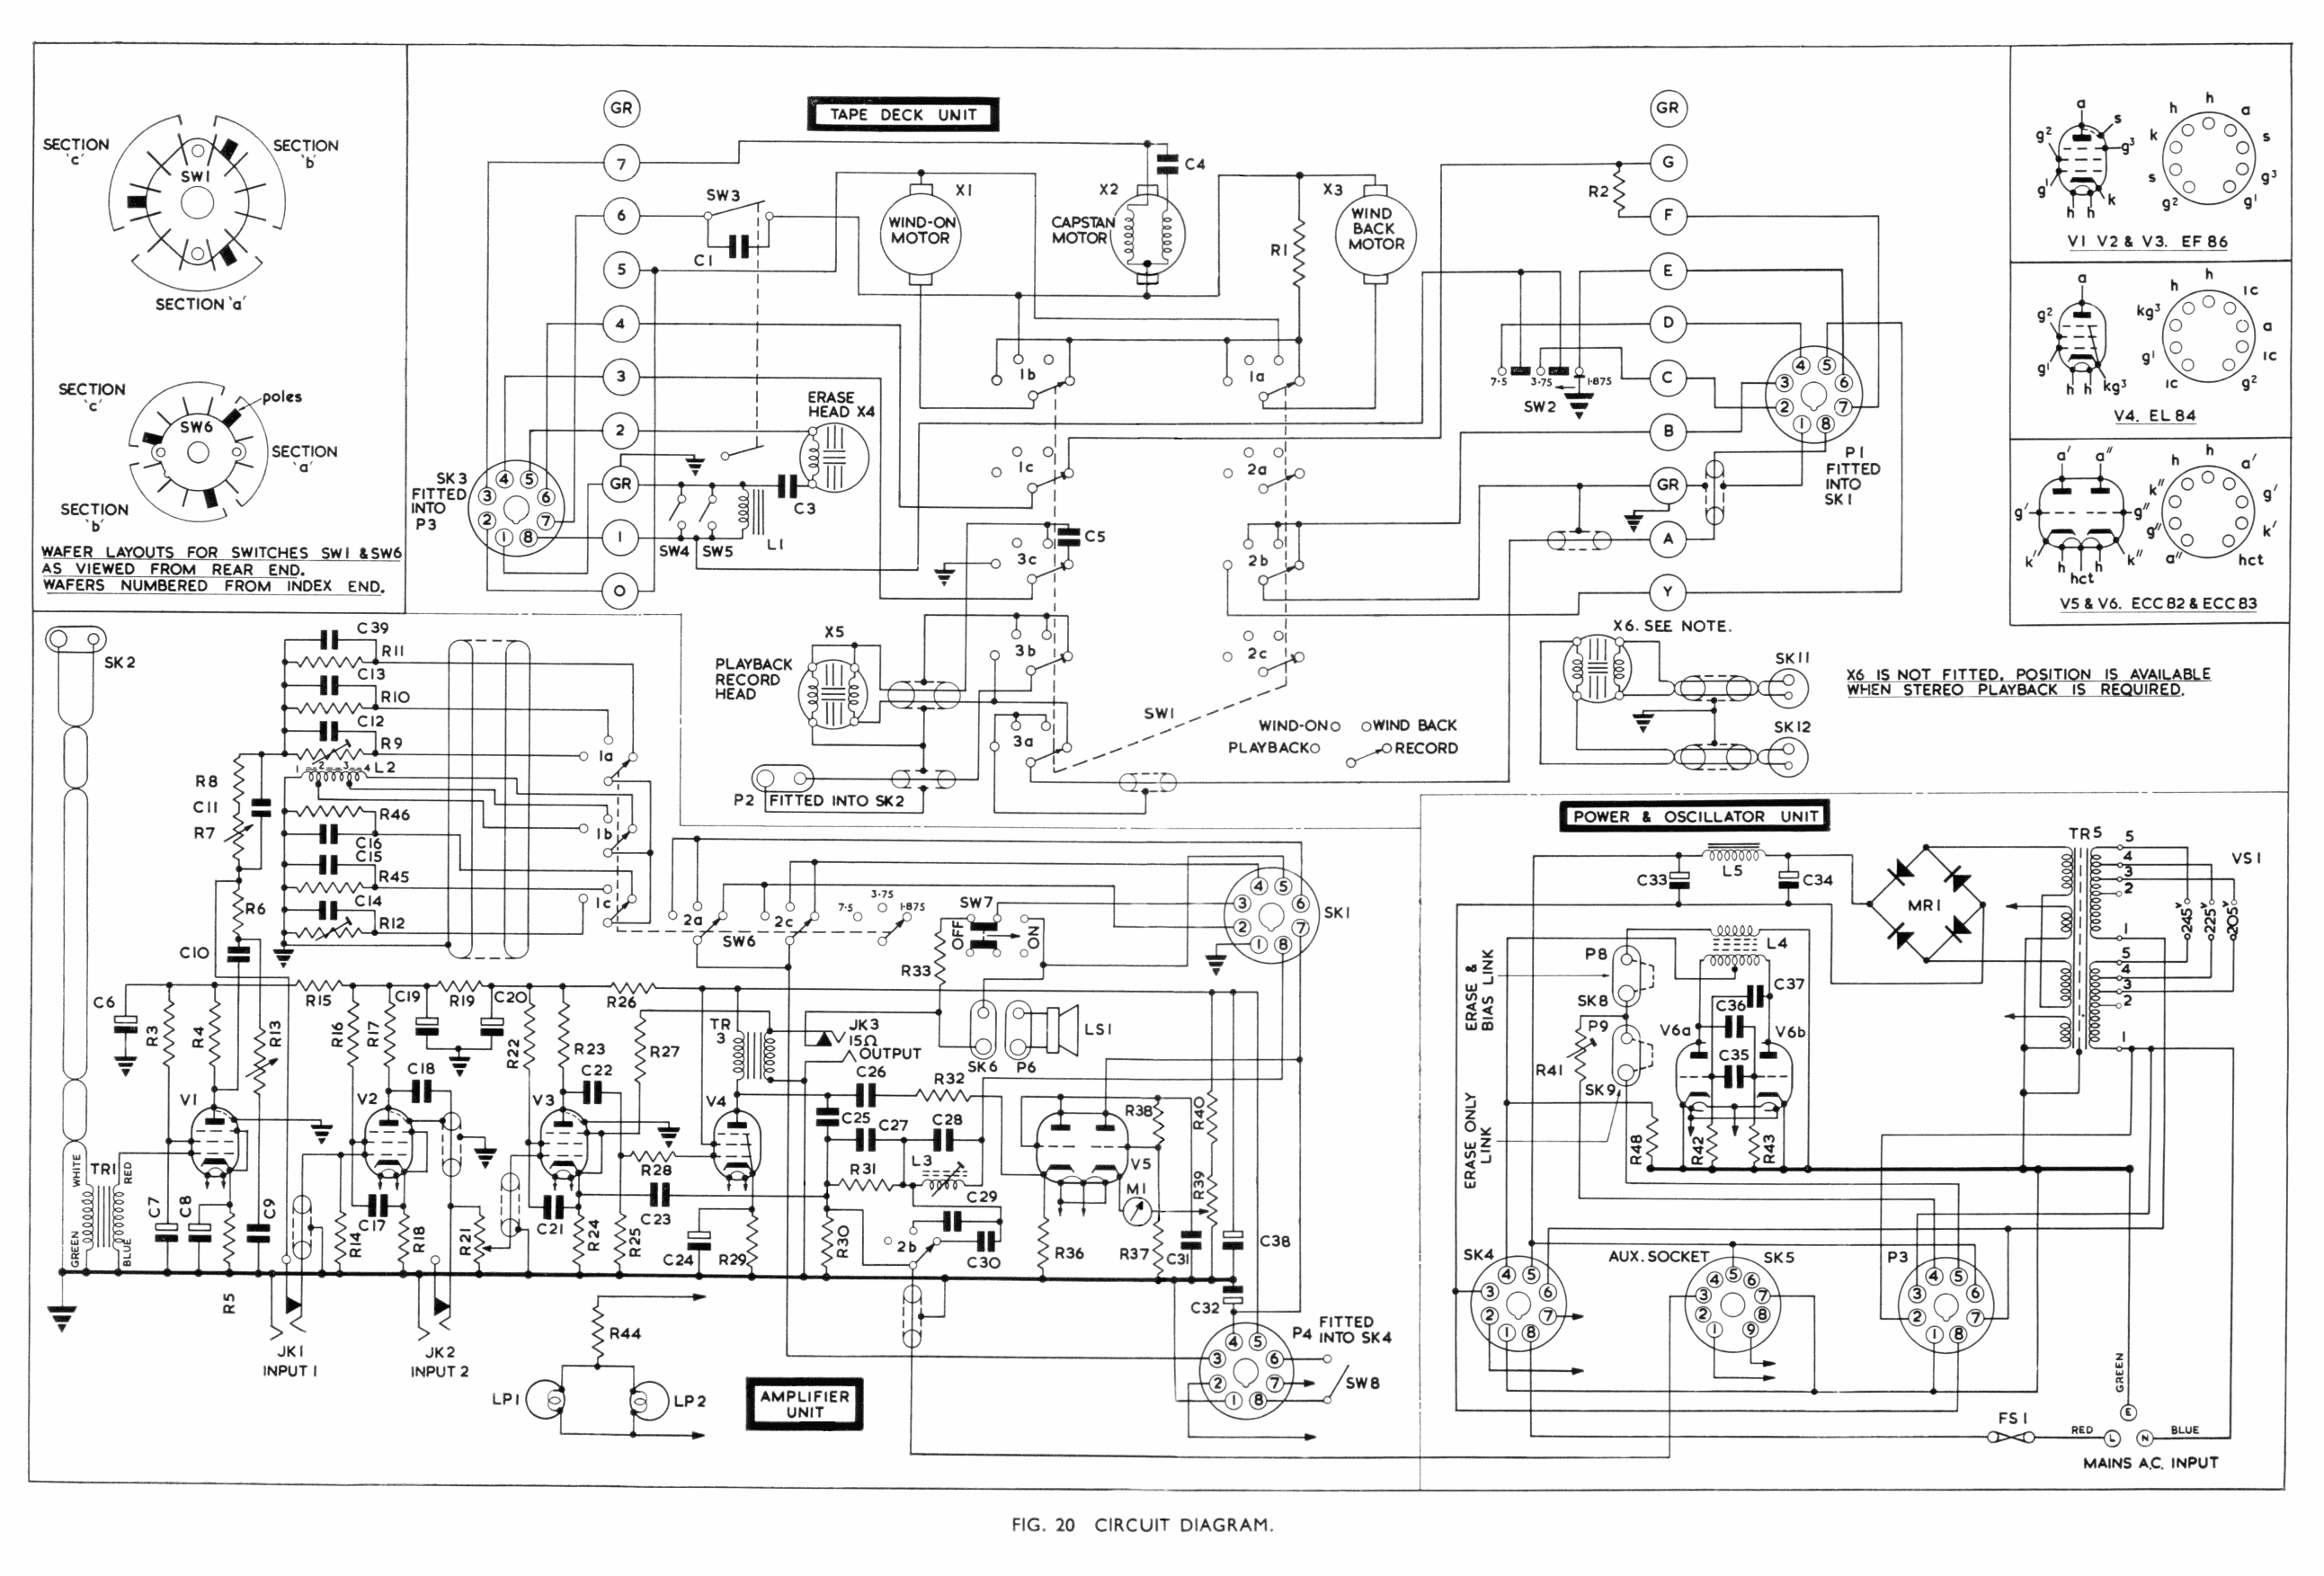 Circuit Diagram 2.0.0.0 Alpha 3